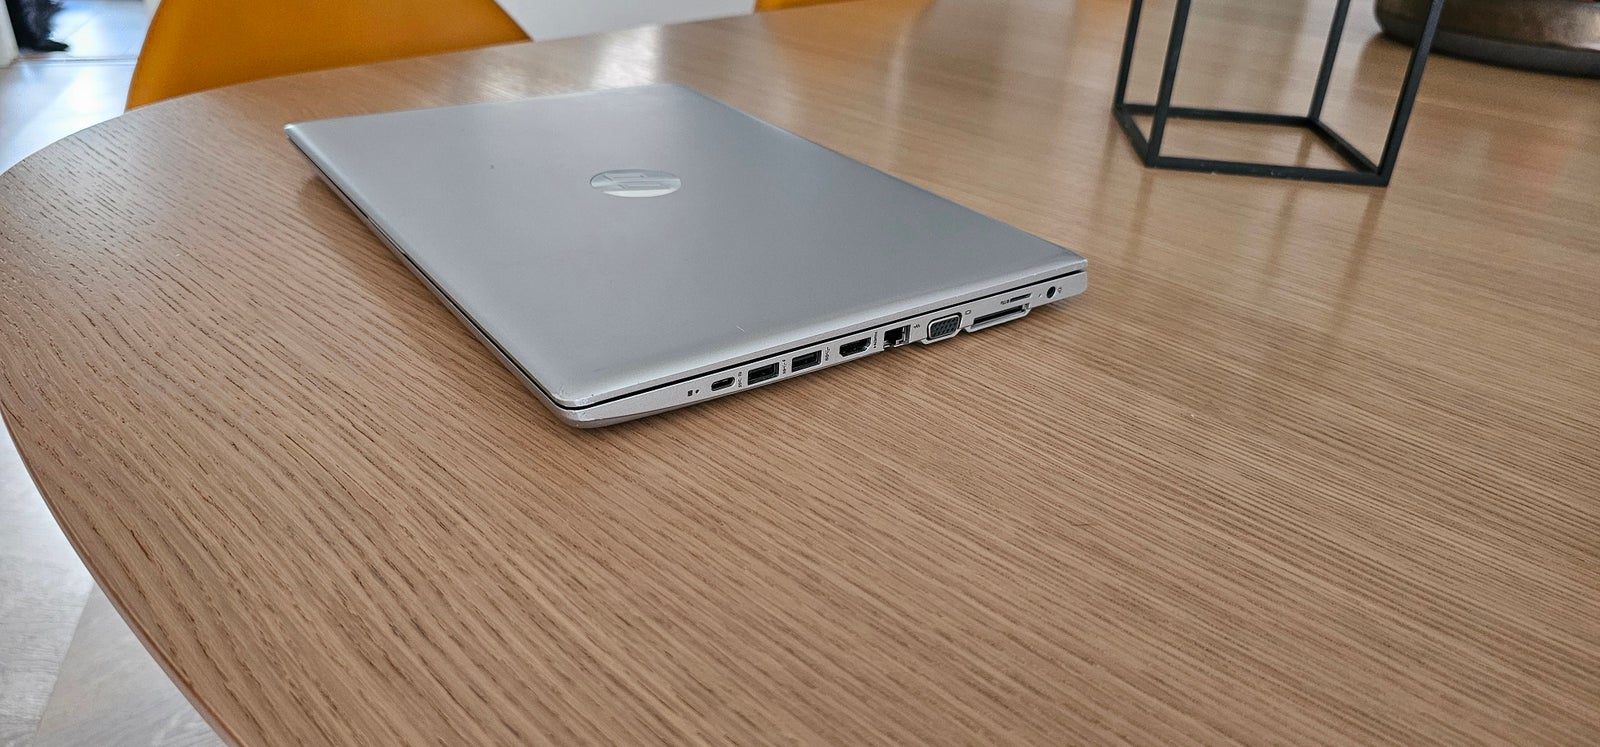 HP ProBook 640 G4 Touchscreen, INtel(R) Core(TM) i5-7300U